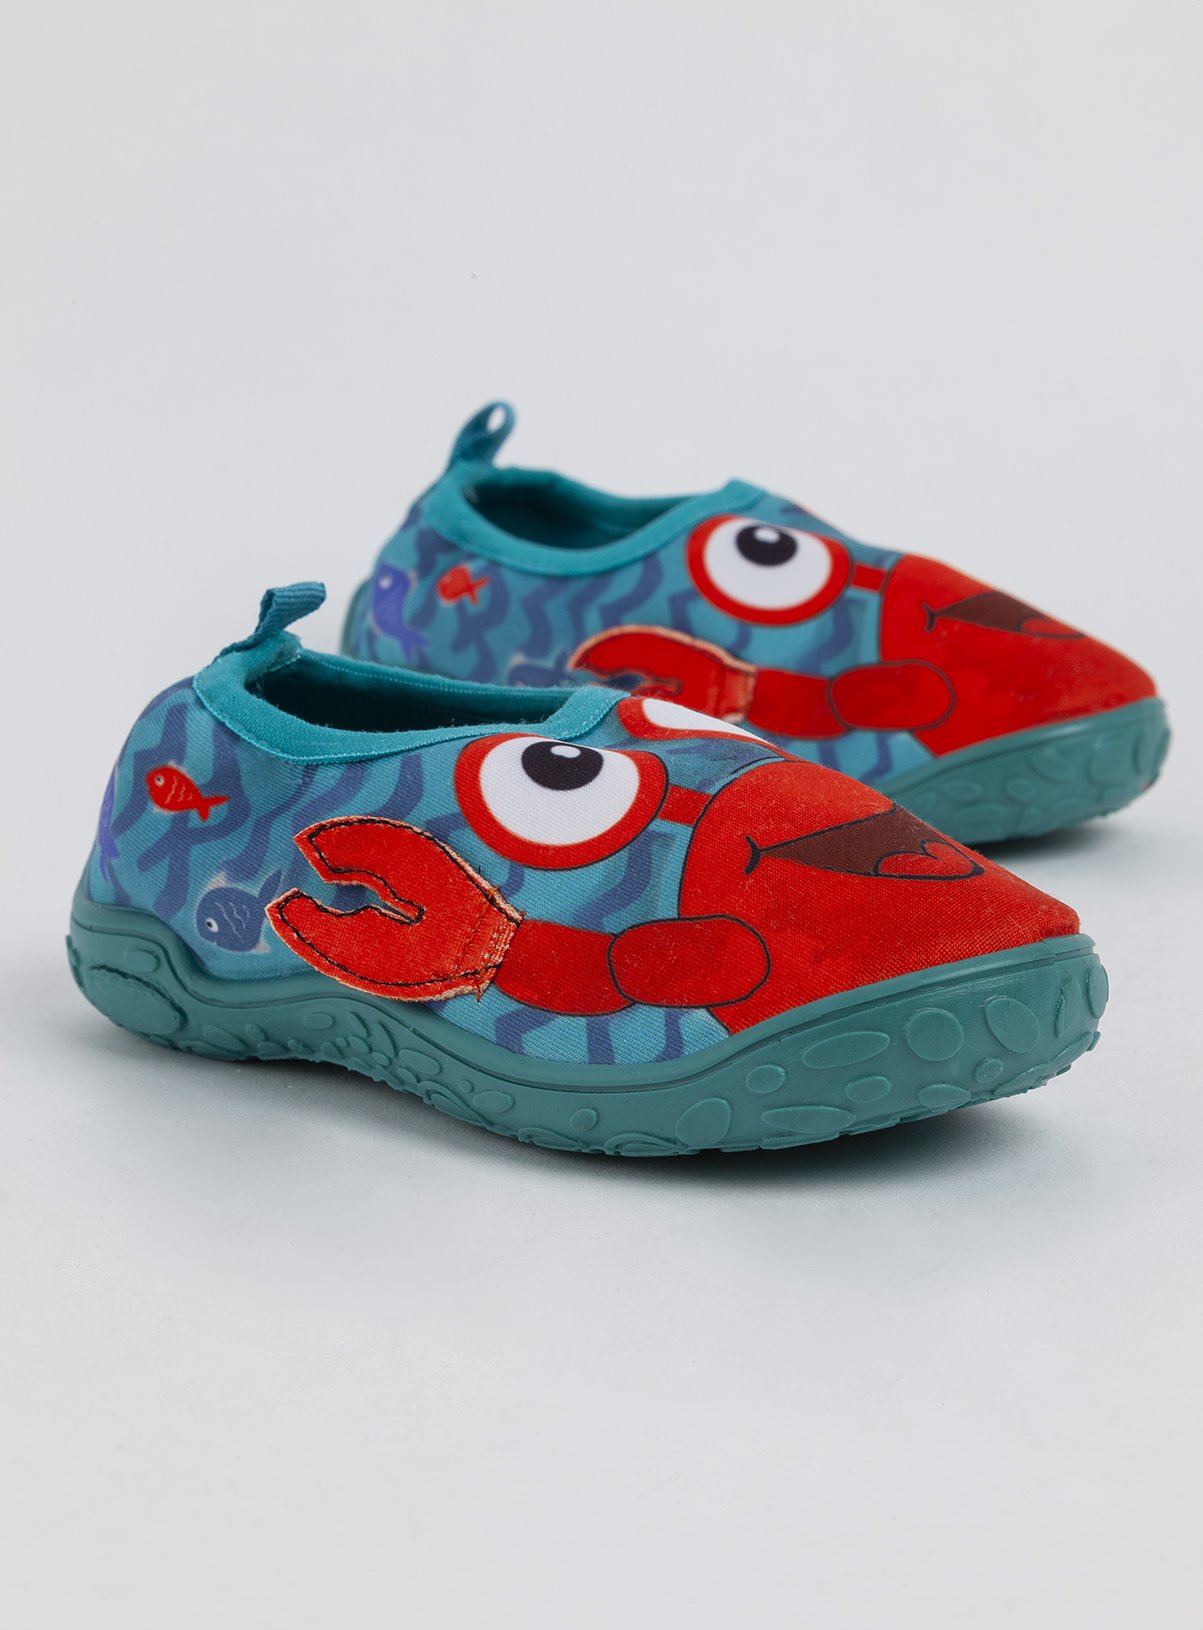 infant aqua shoes